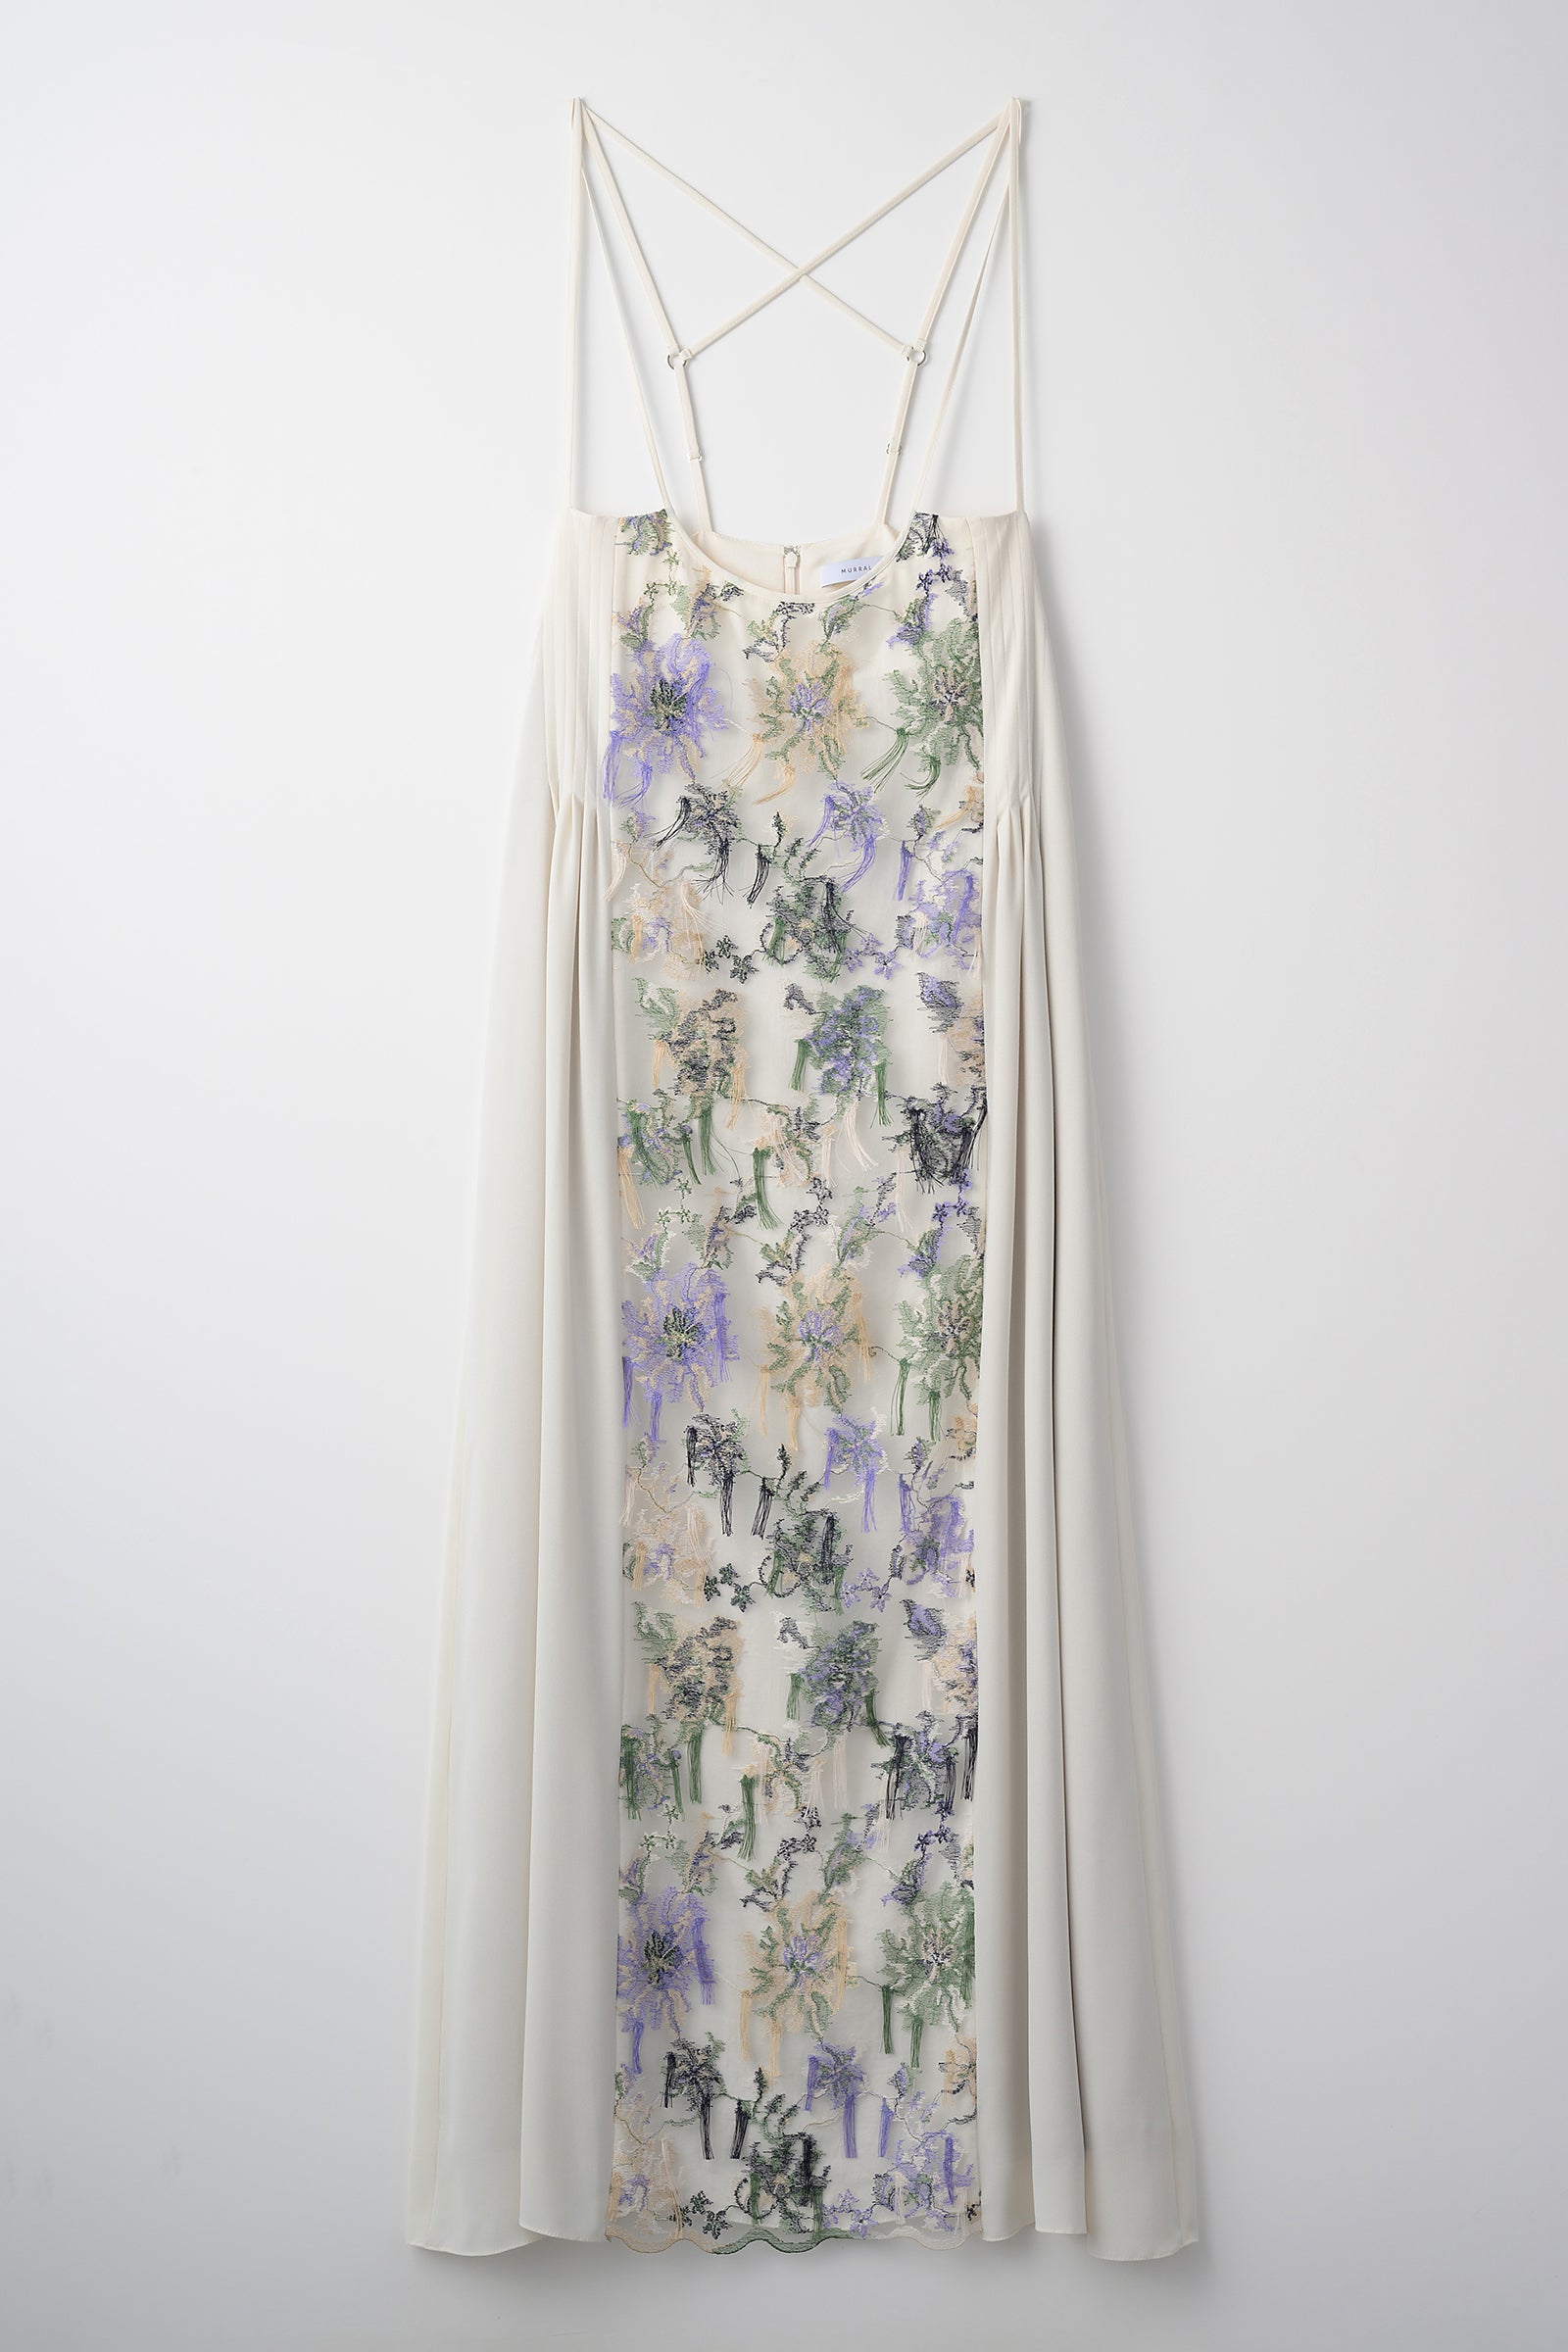 Floating flower lace skirt (Ivory)